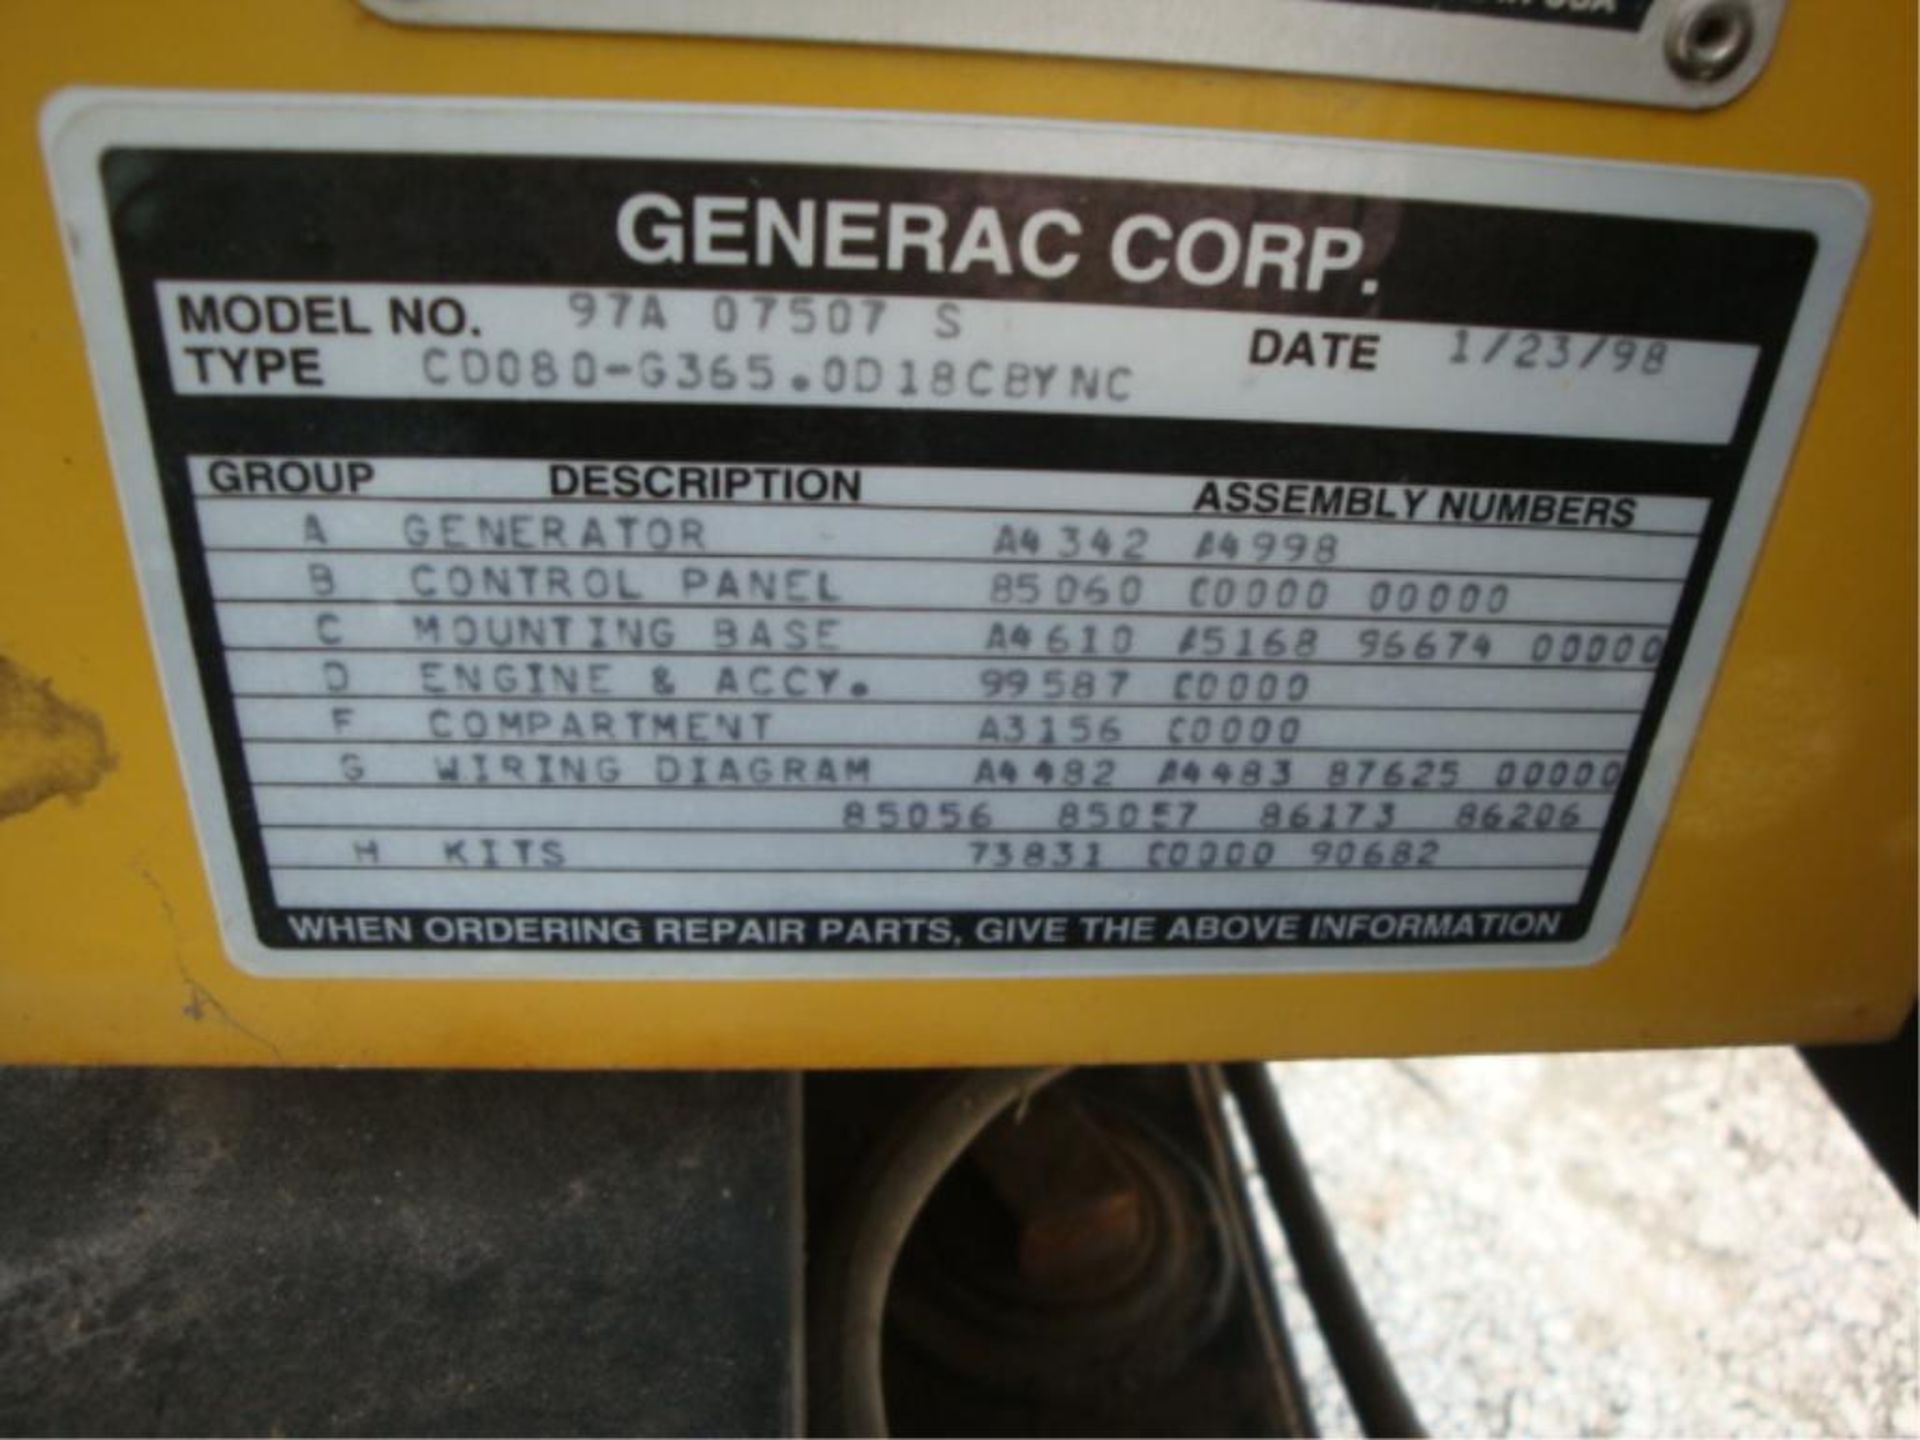 1998 Generac Olympian Generator diesel 5.0Ltr342hrs, model 97A07507-S serial 2039267 volts 120/ - Image 12 of 40